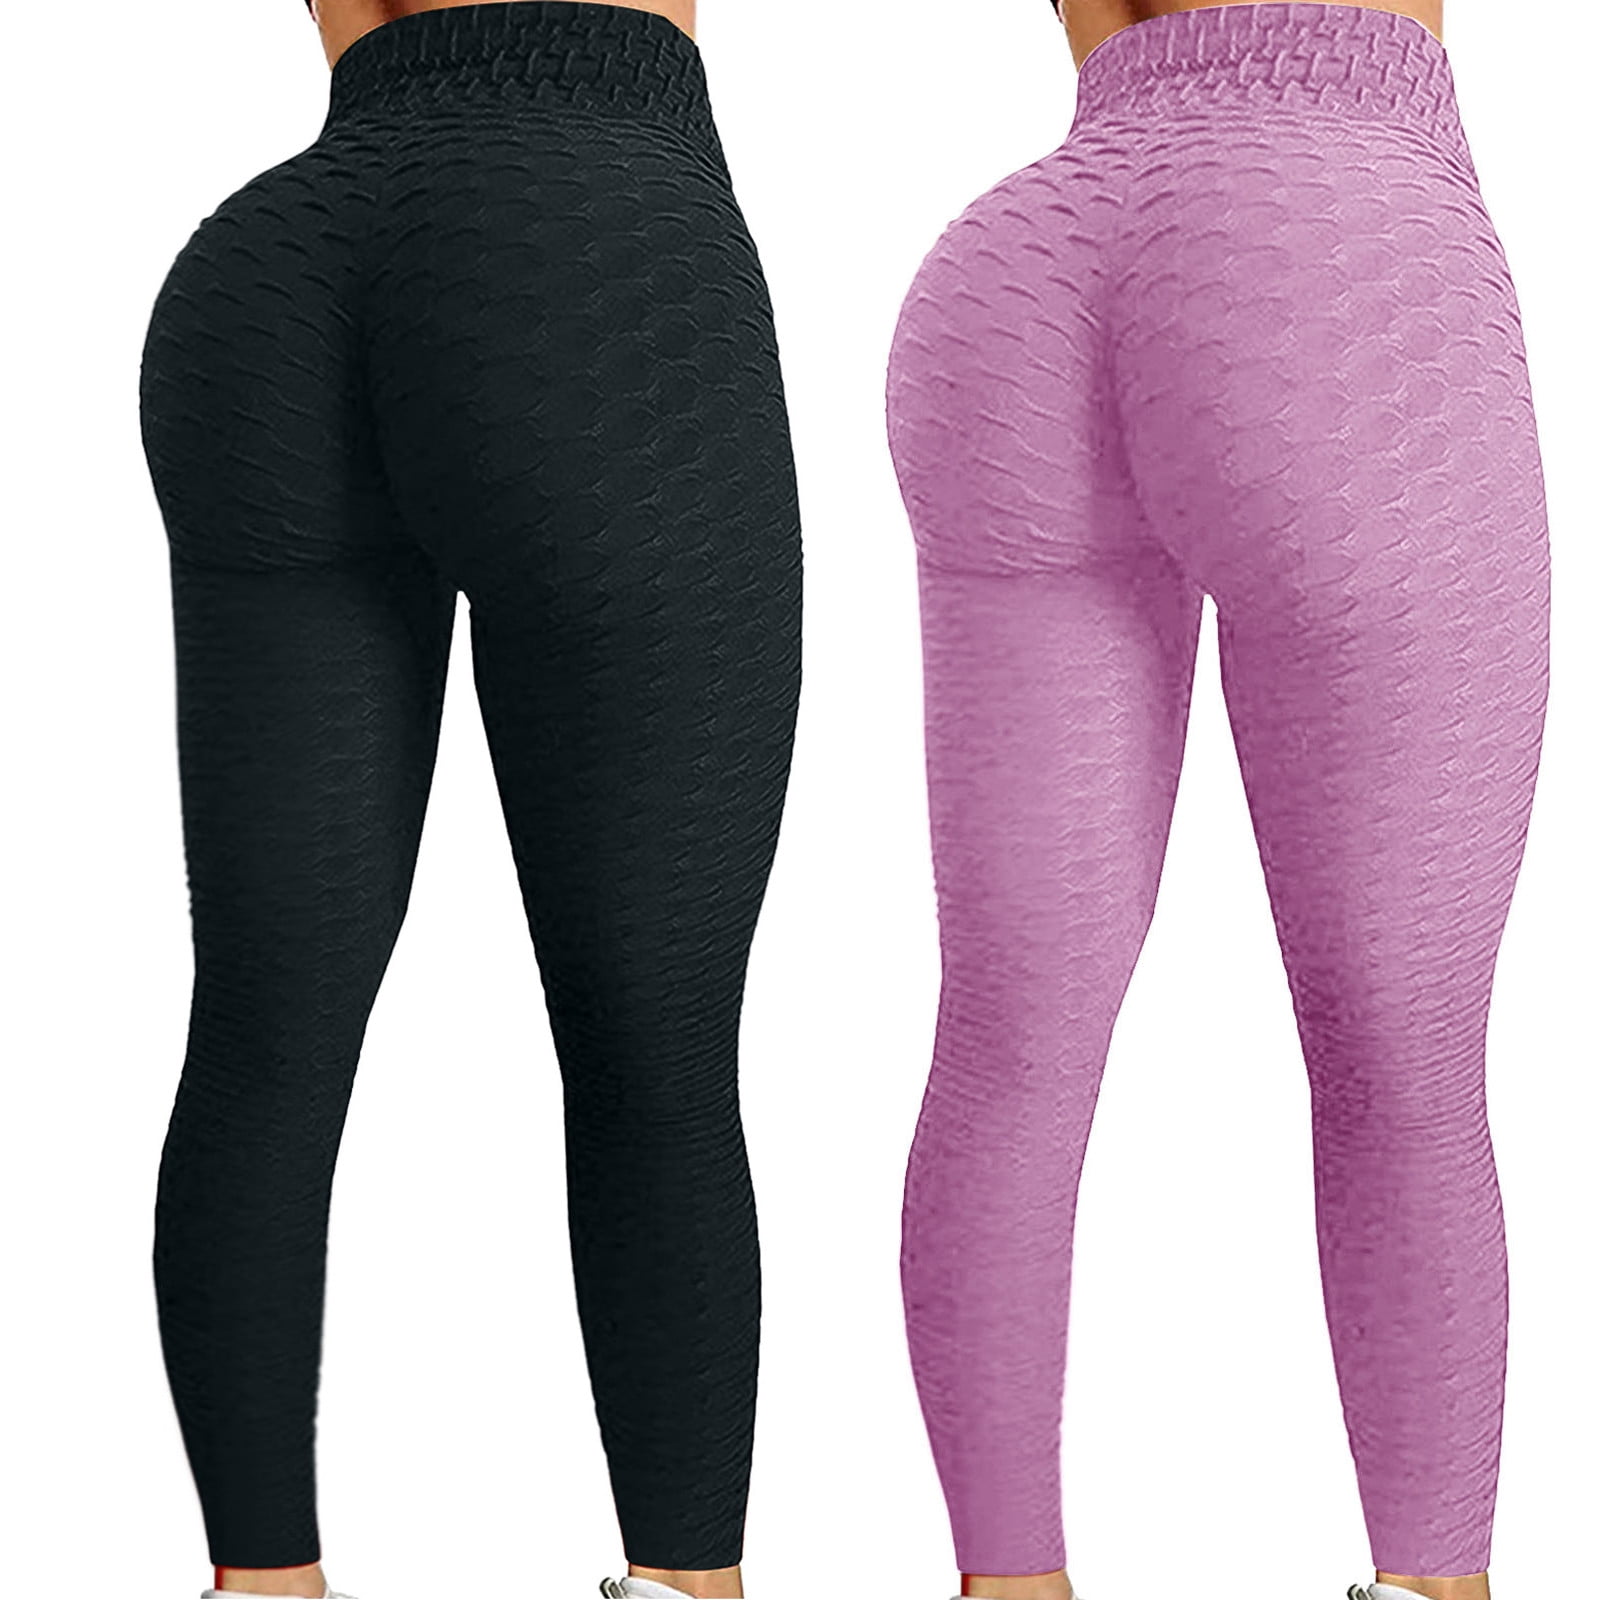 Gyouwnll Women's Hip-lifting High-waist Sexy Tie-dye Yoga Pants